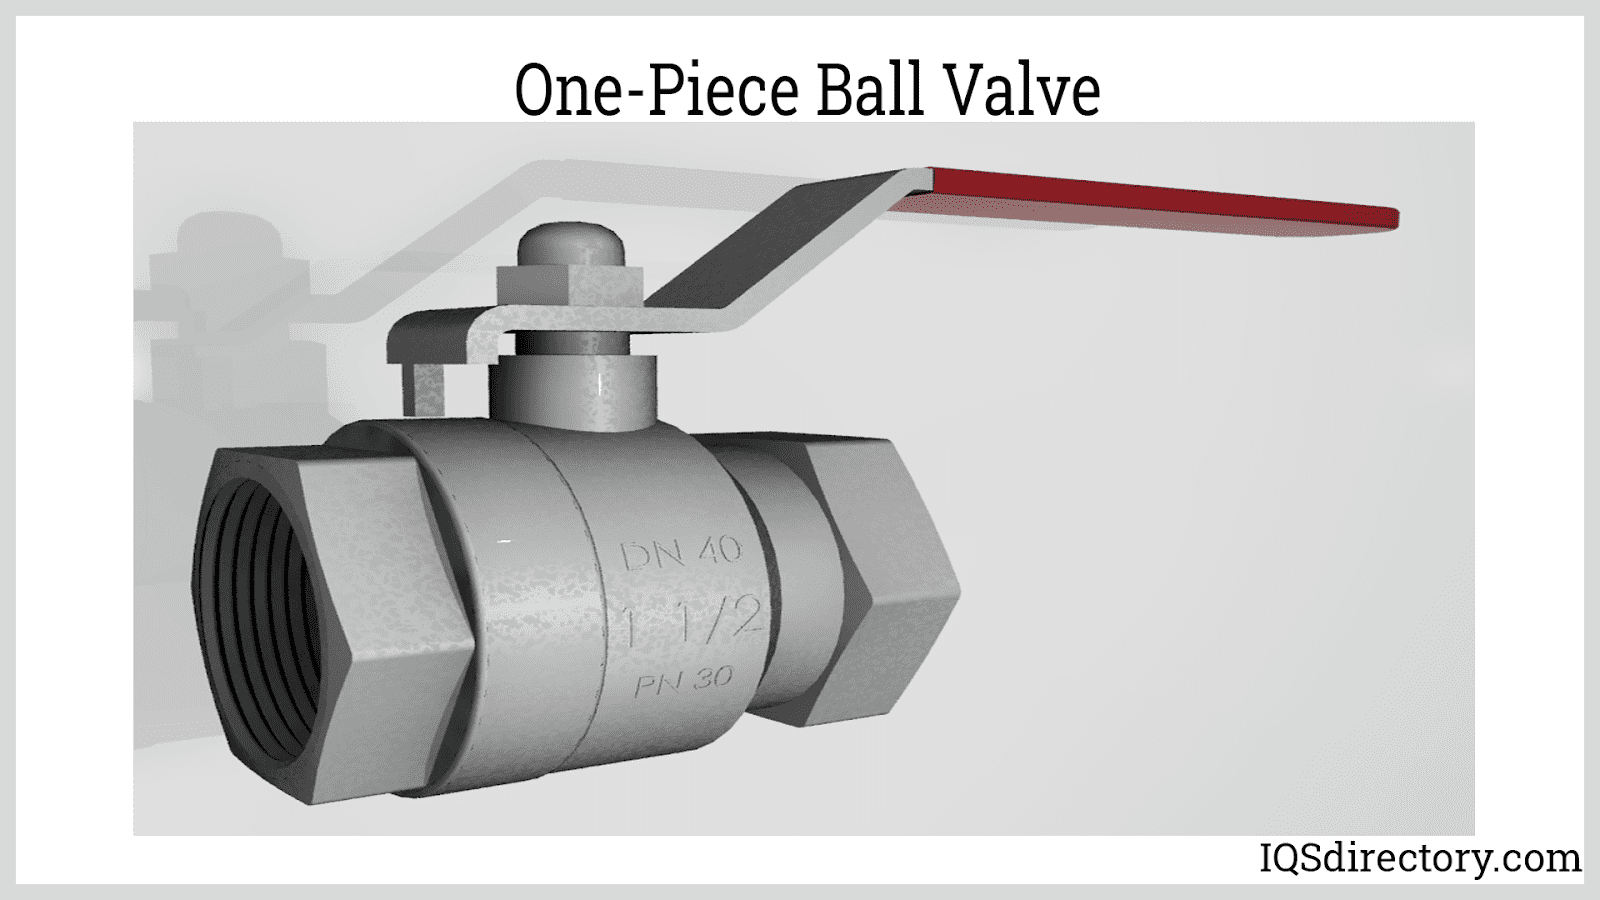 One-Piece Ball Valve